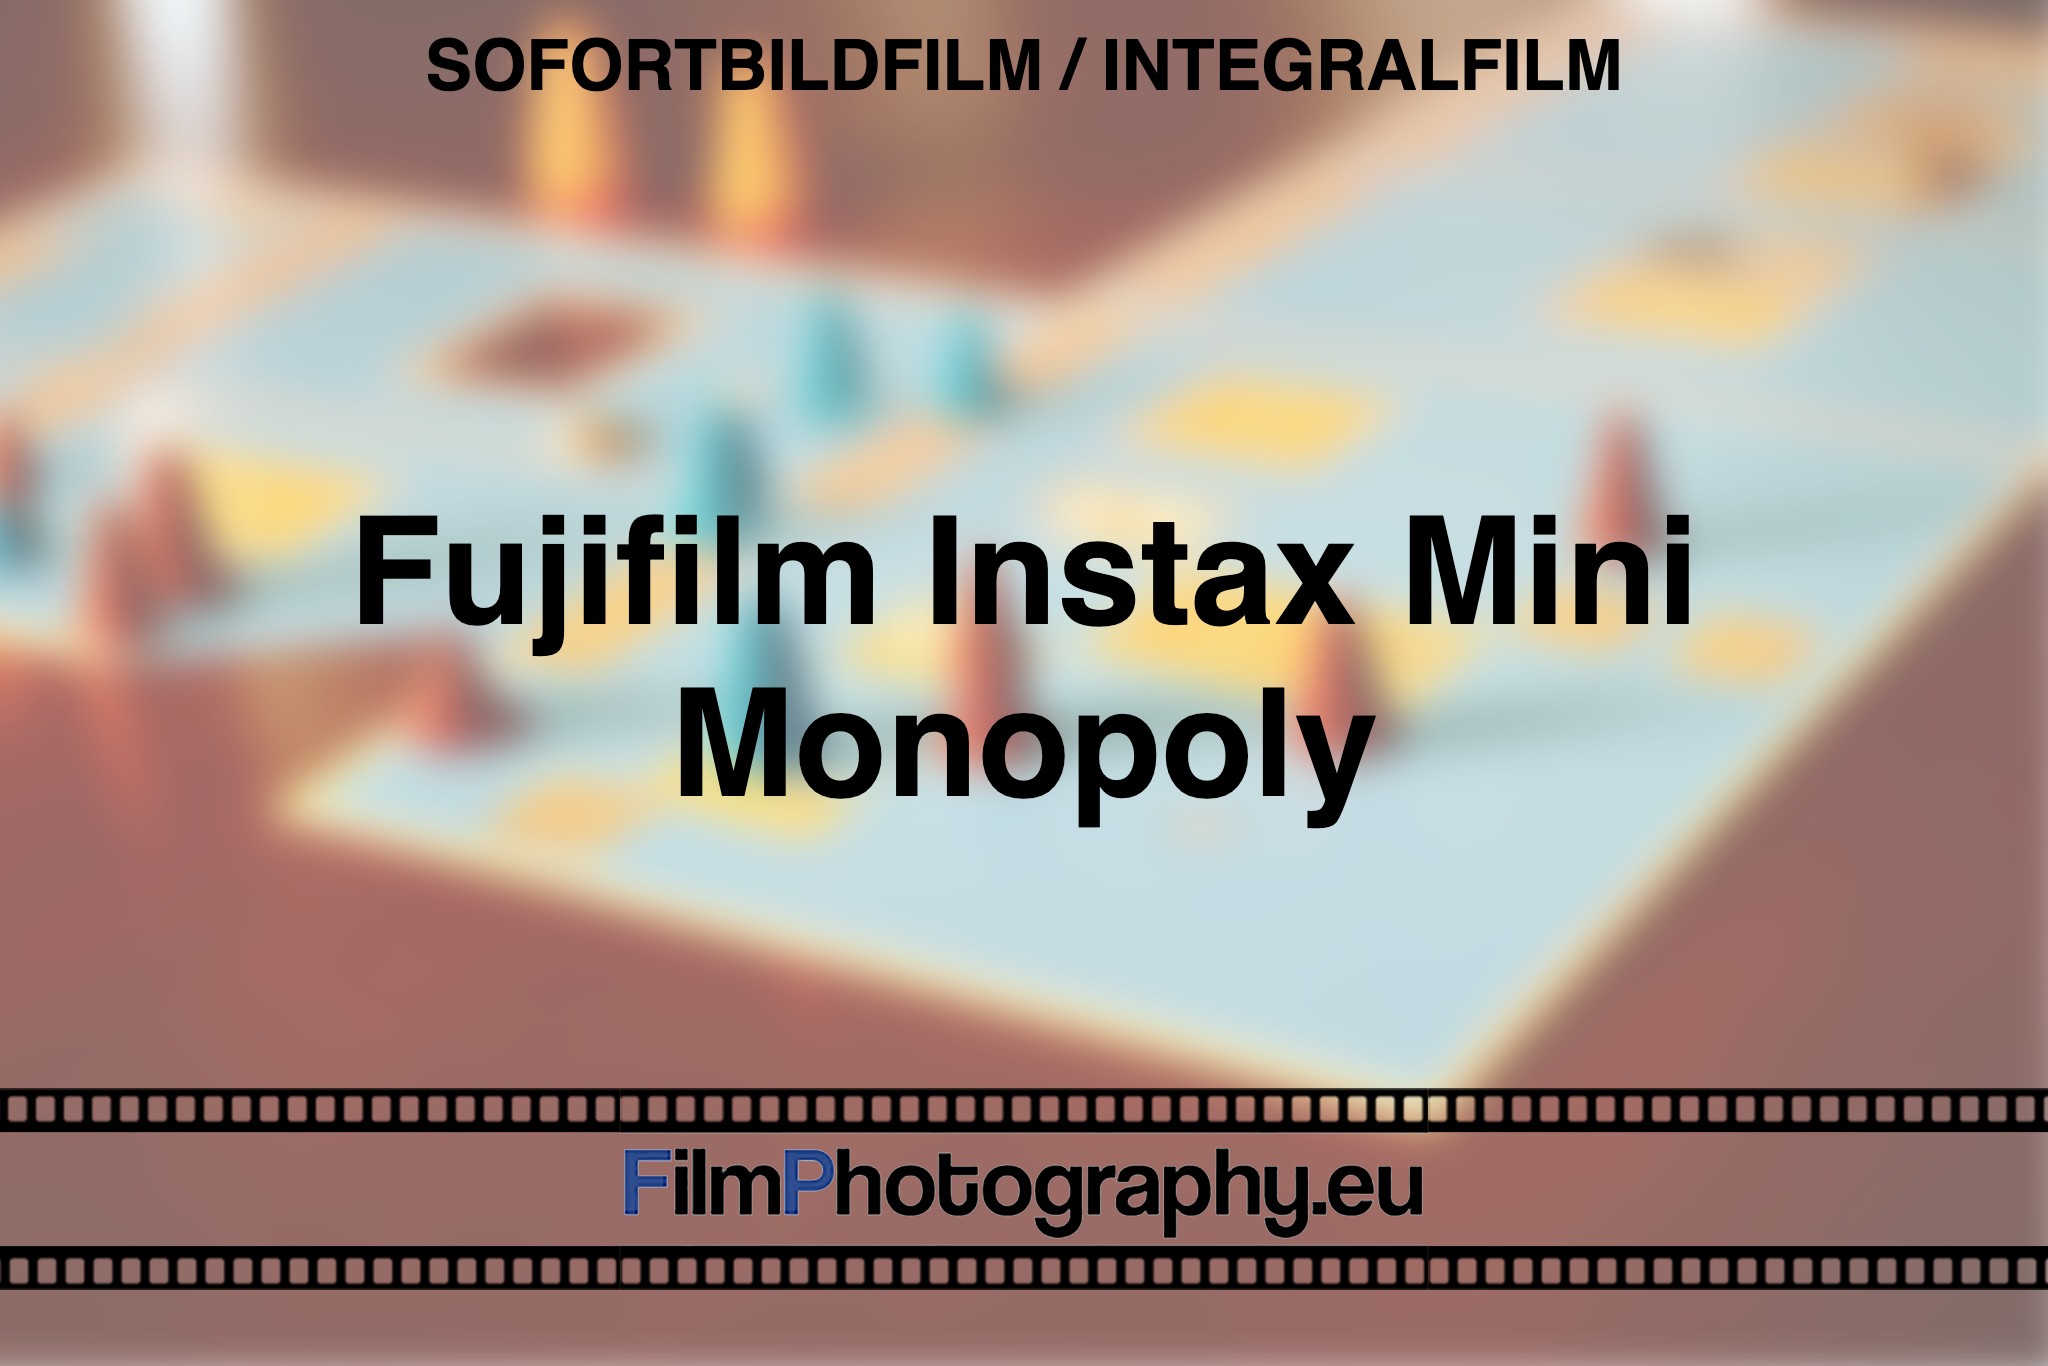 fujifilm-instax-mini-monopoly-sofortbildfilm-integralfilm-fp-bnv